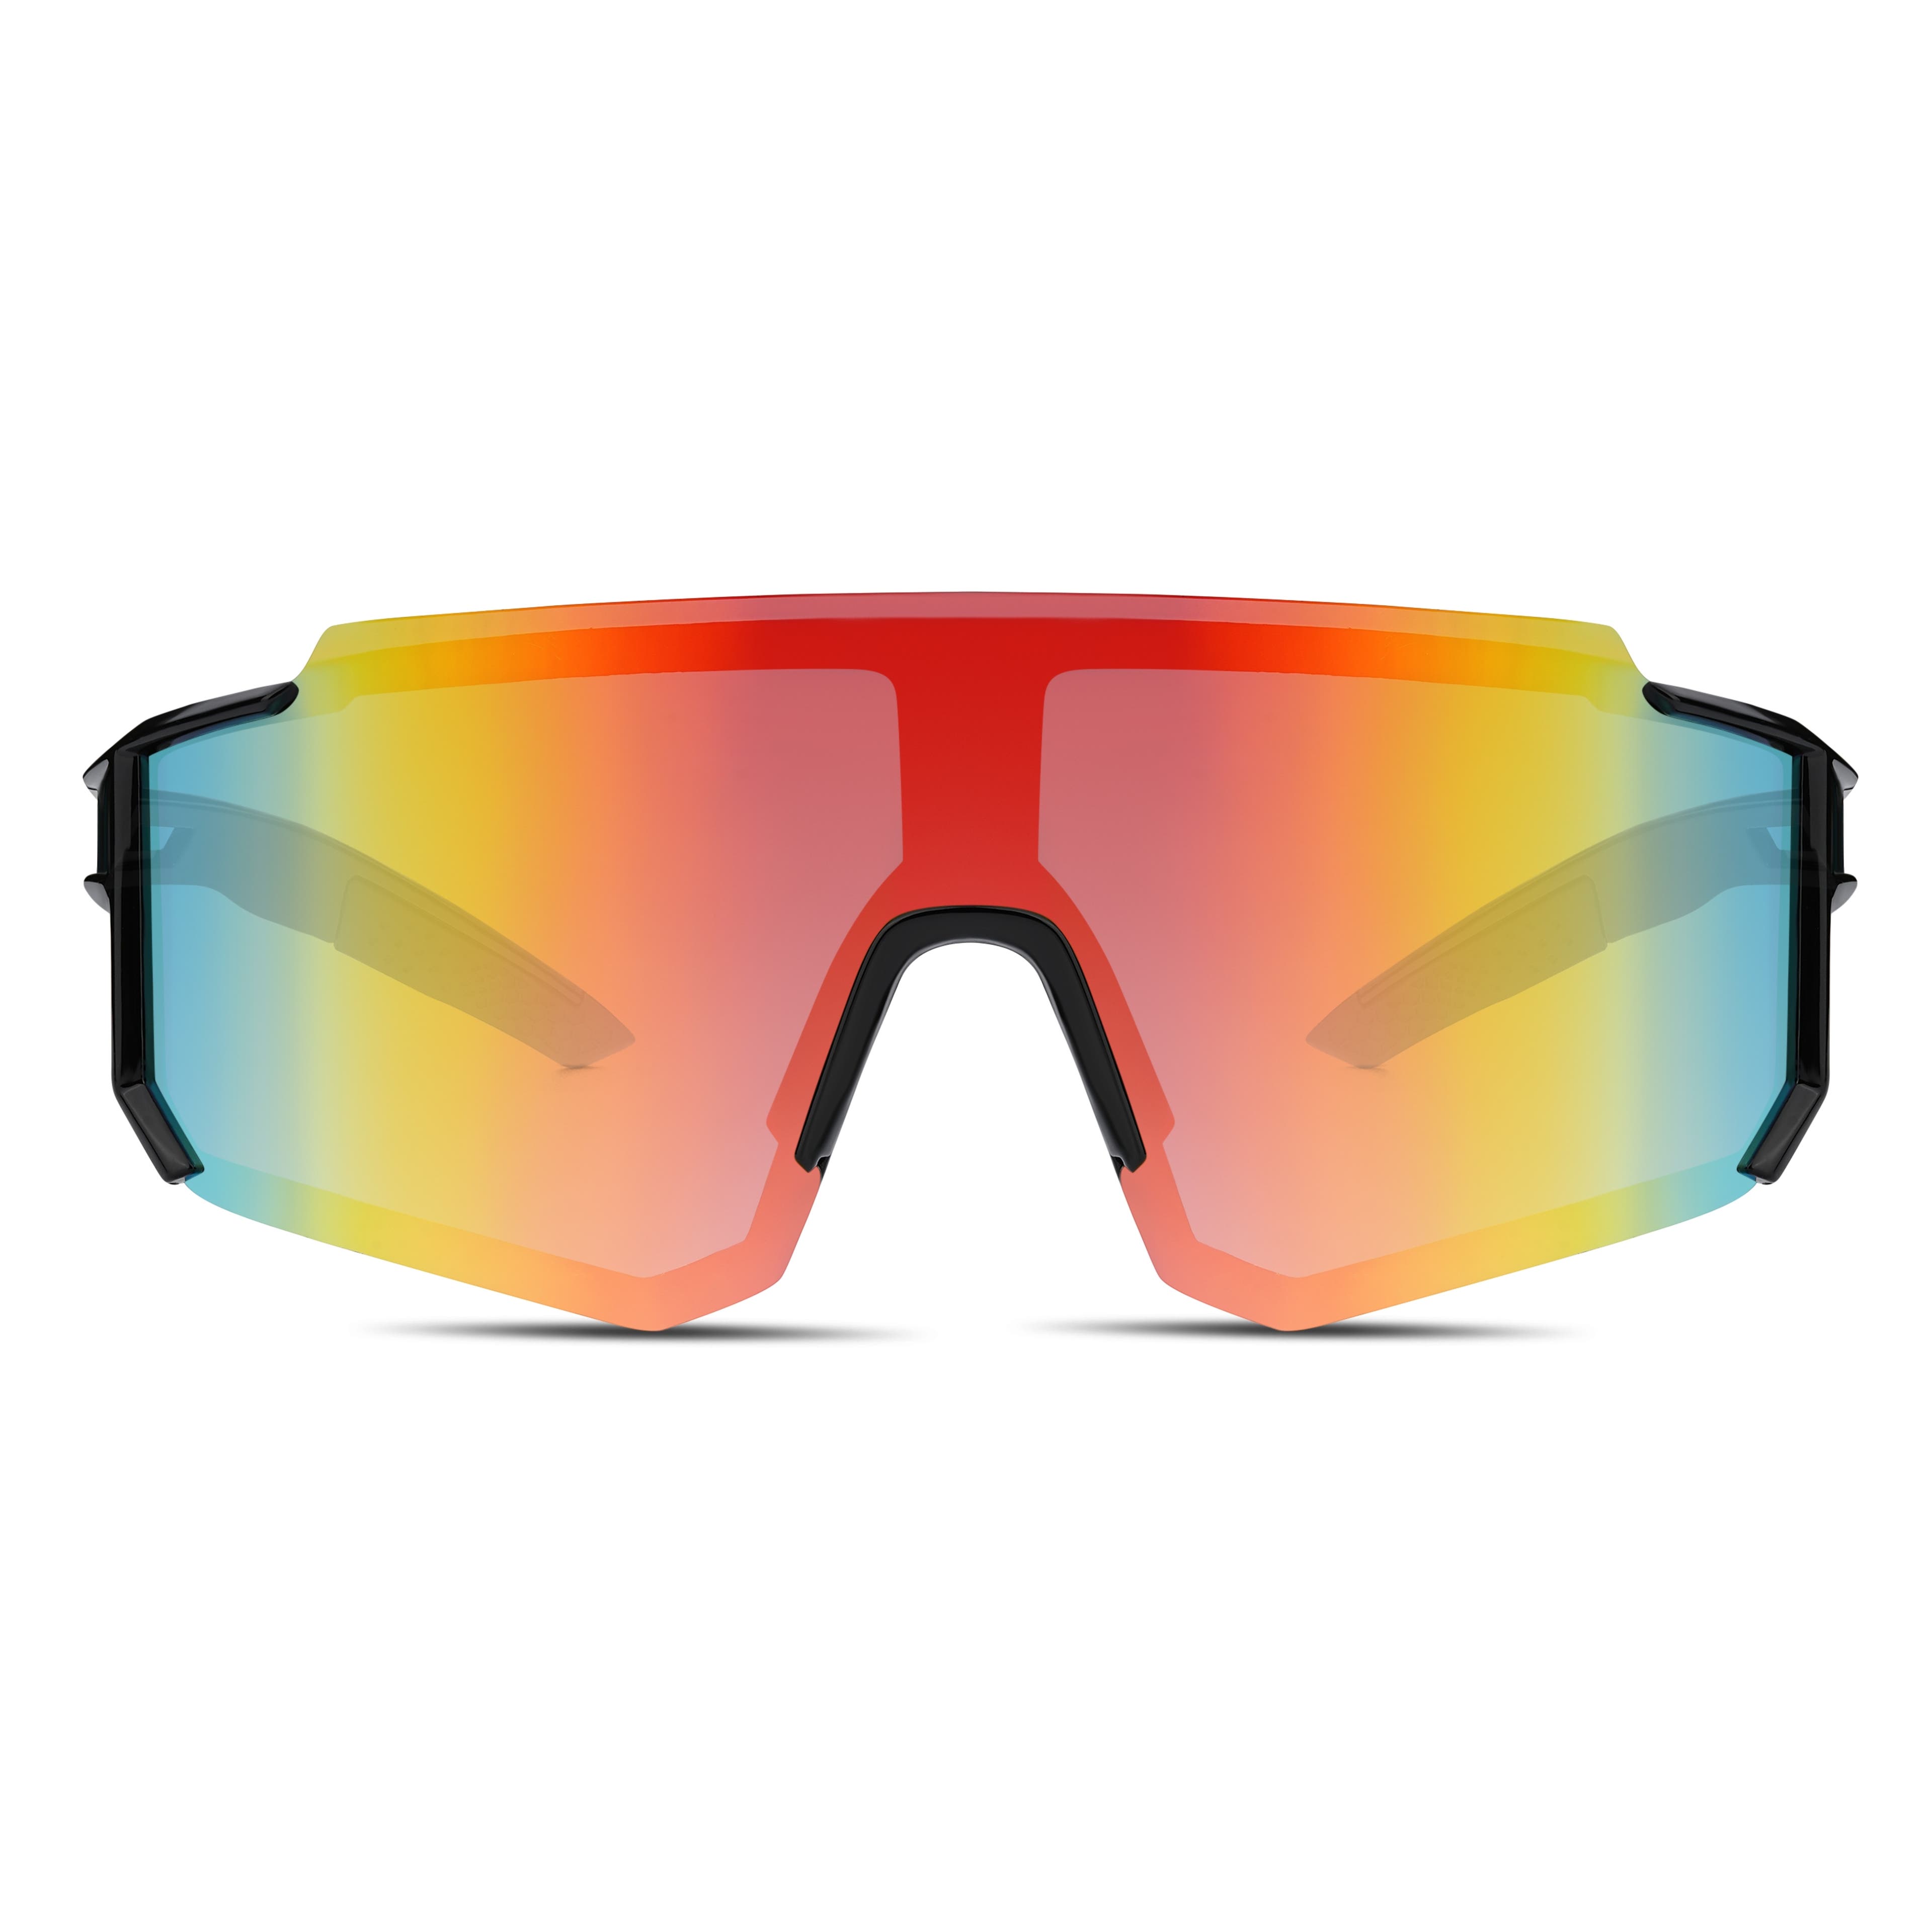 Black & Orange Wraparound Sports Sunglasses, In stock!